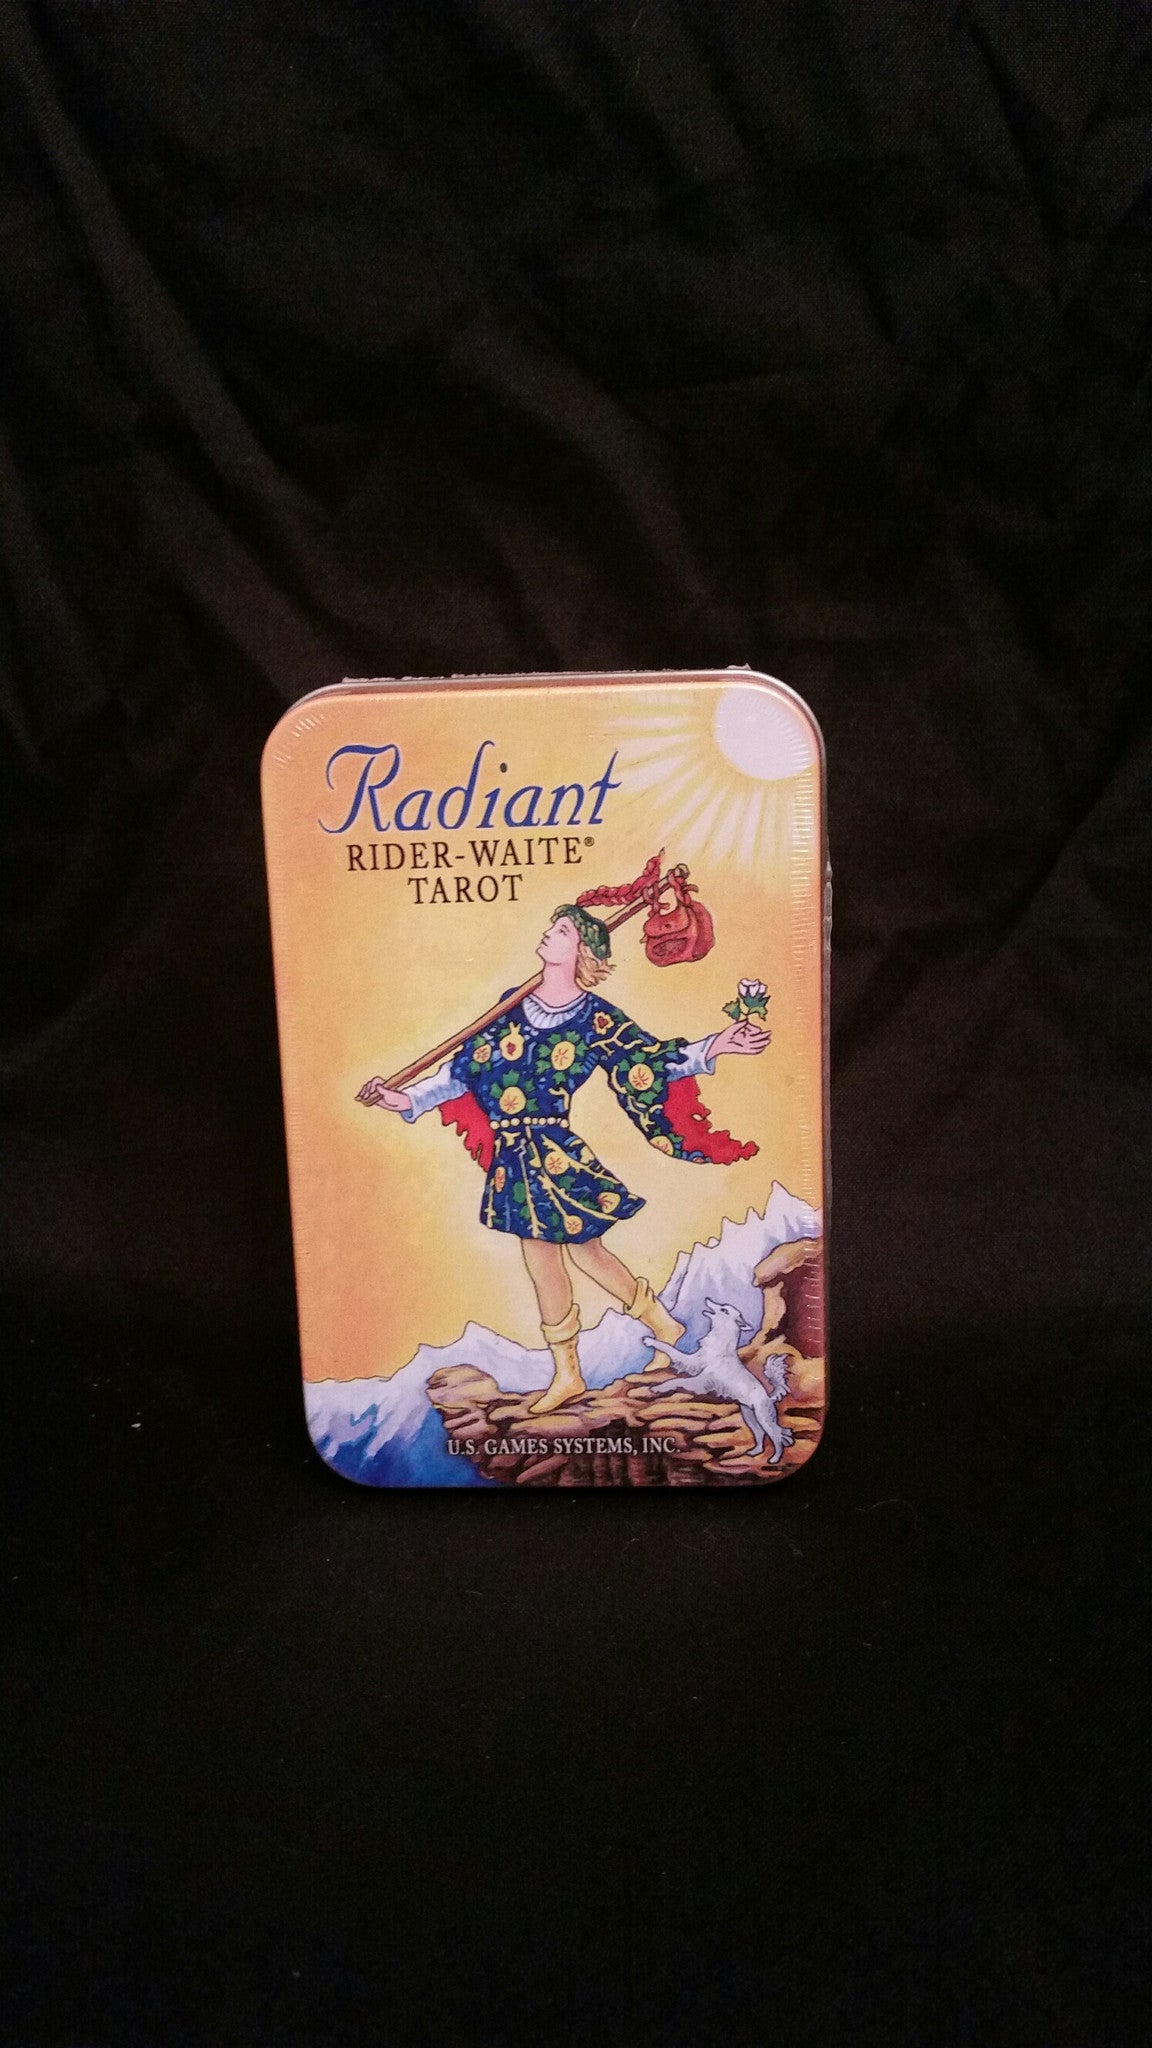 Radiant Rider-Waite Tarot deck